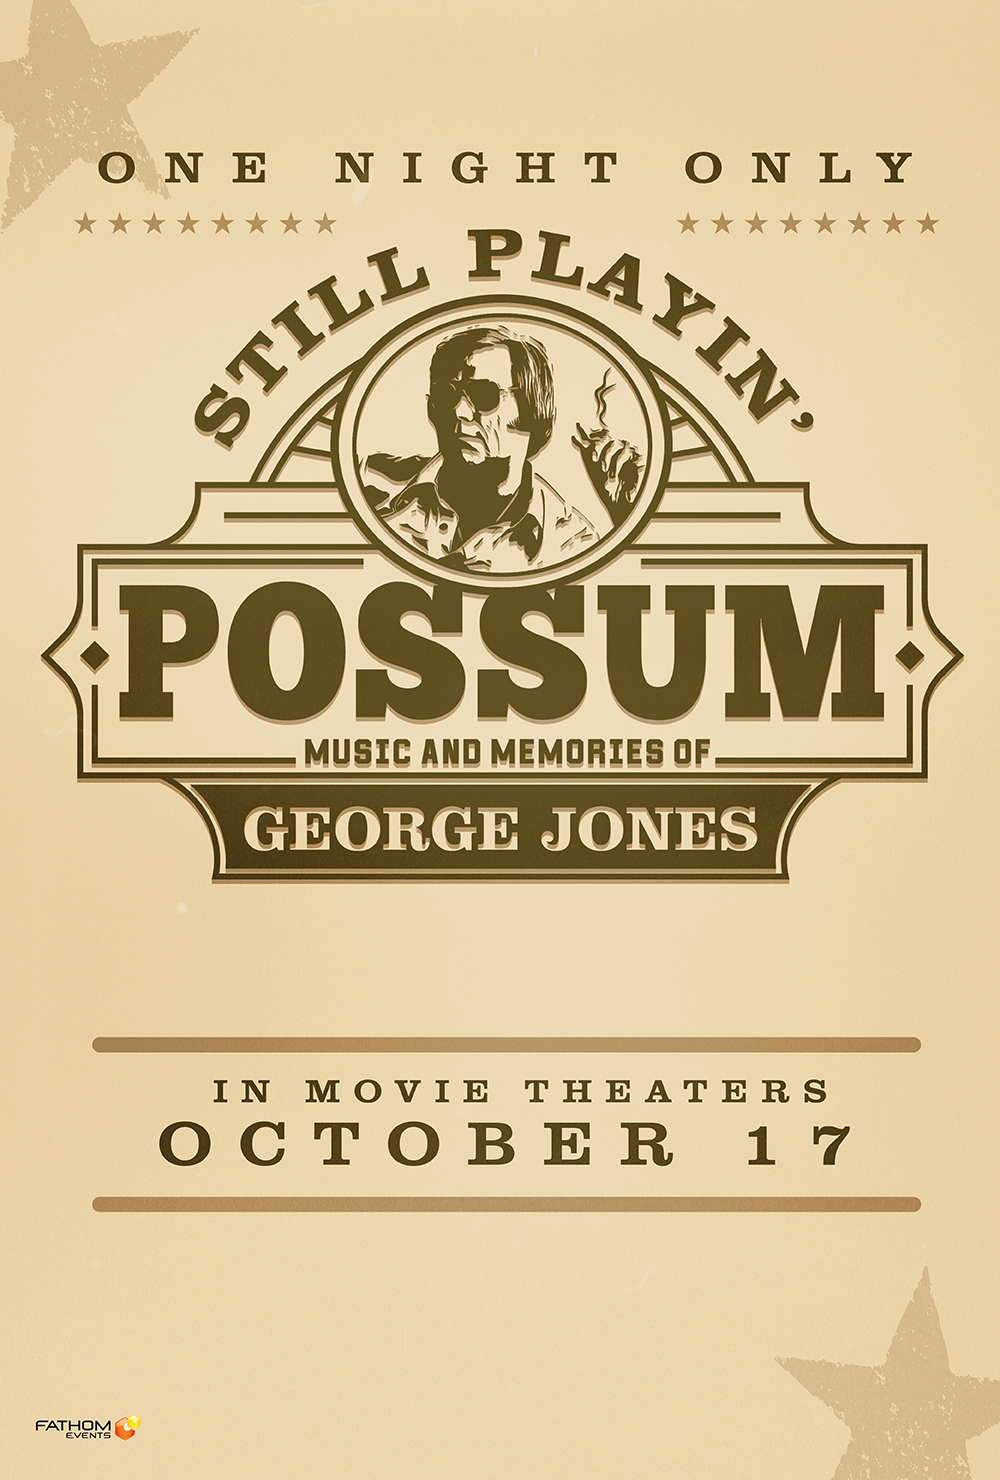 Still Playin’ Possum: Music and Memories of George Jones